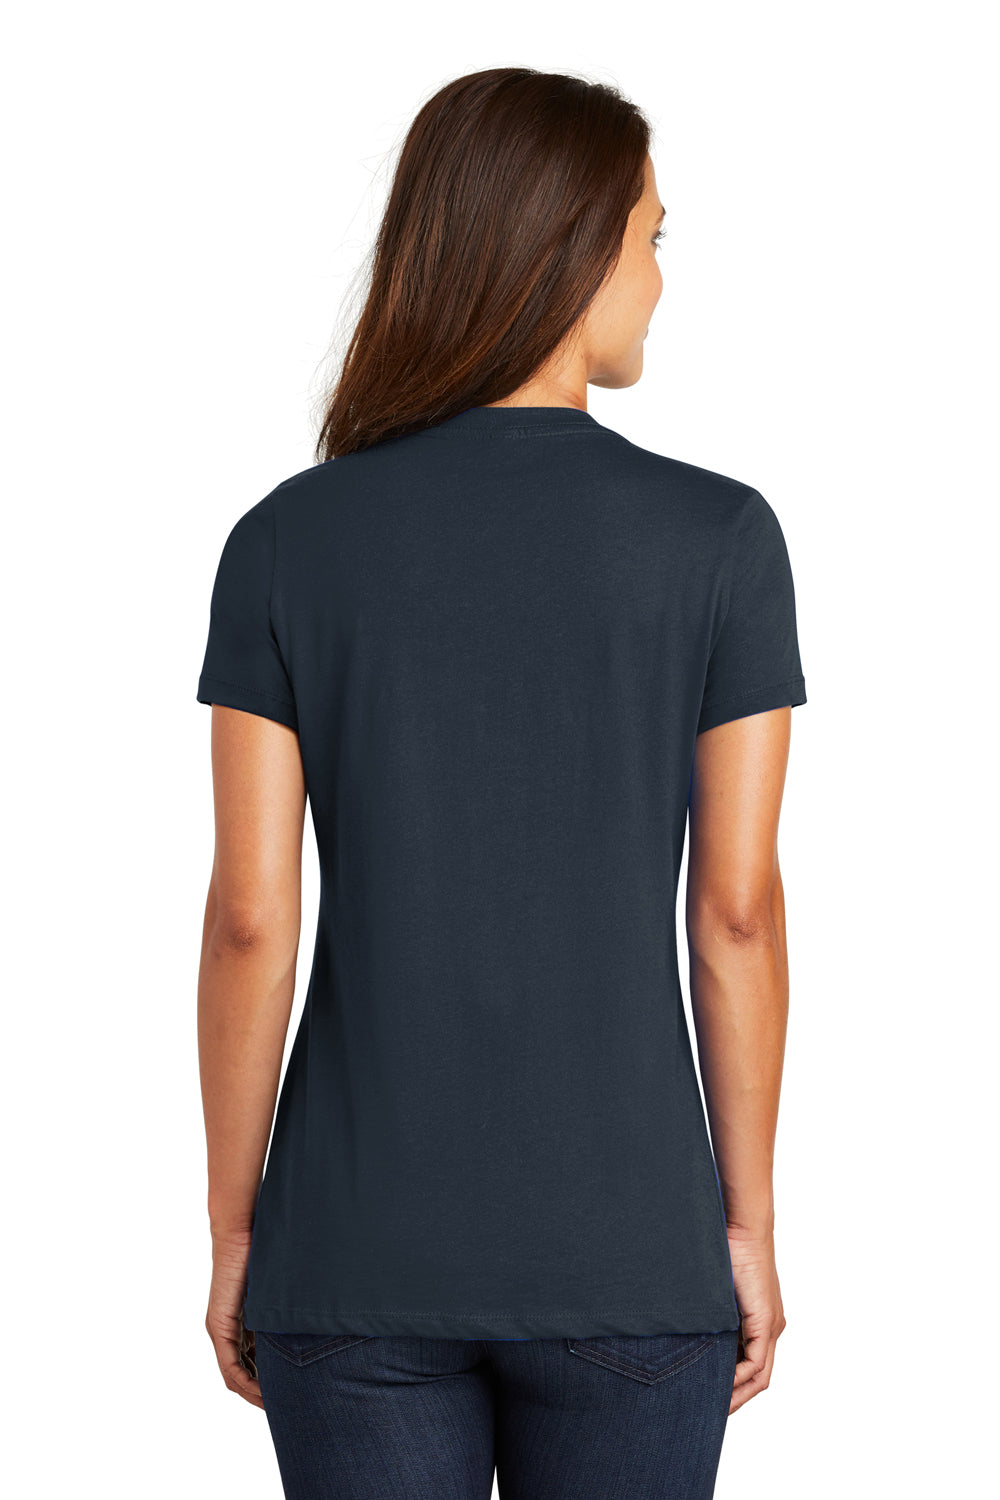 District DM1170L Womens Perfect Weight Short Sleeve V-Neck T-Shirt Navy Blue Back